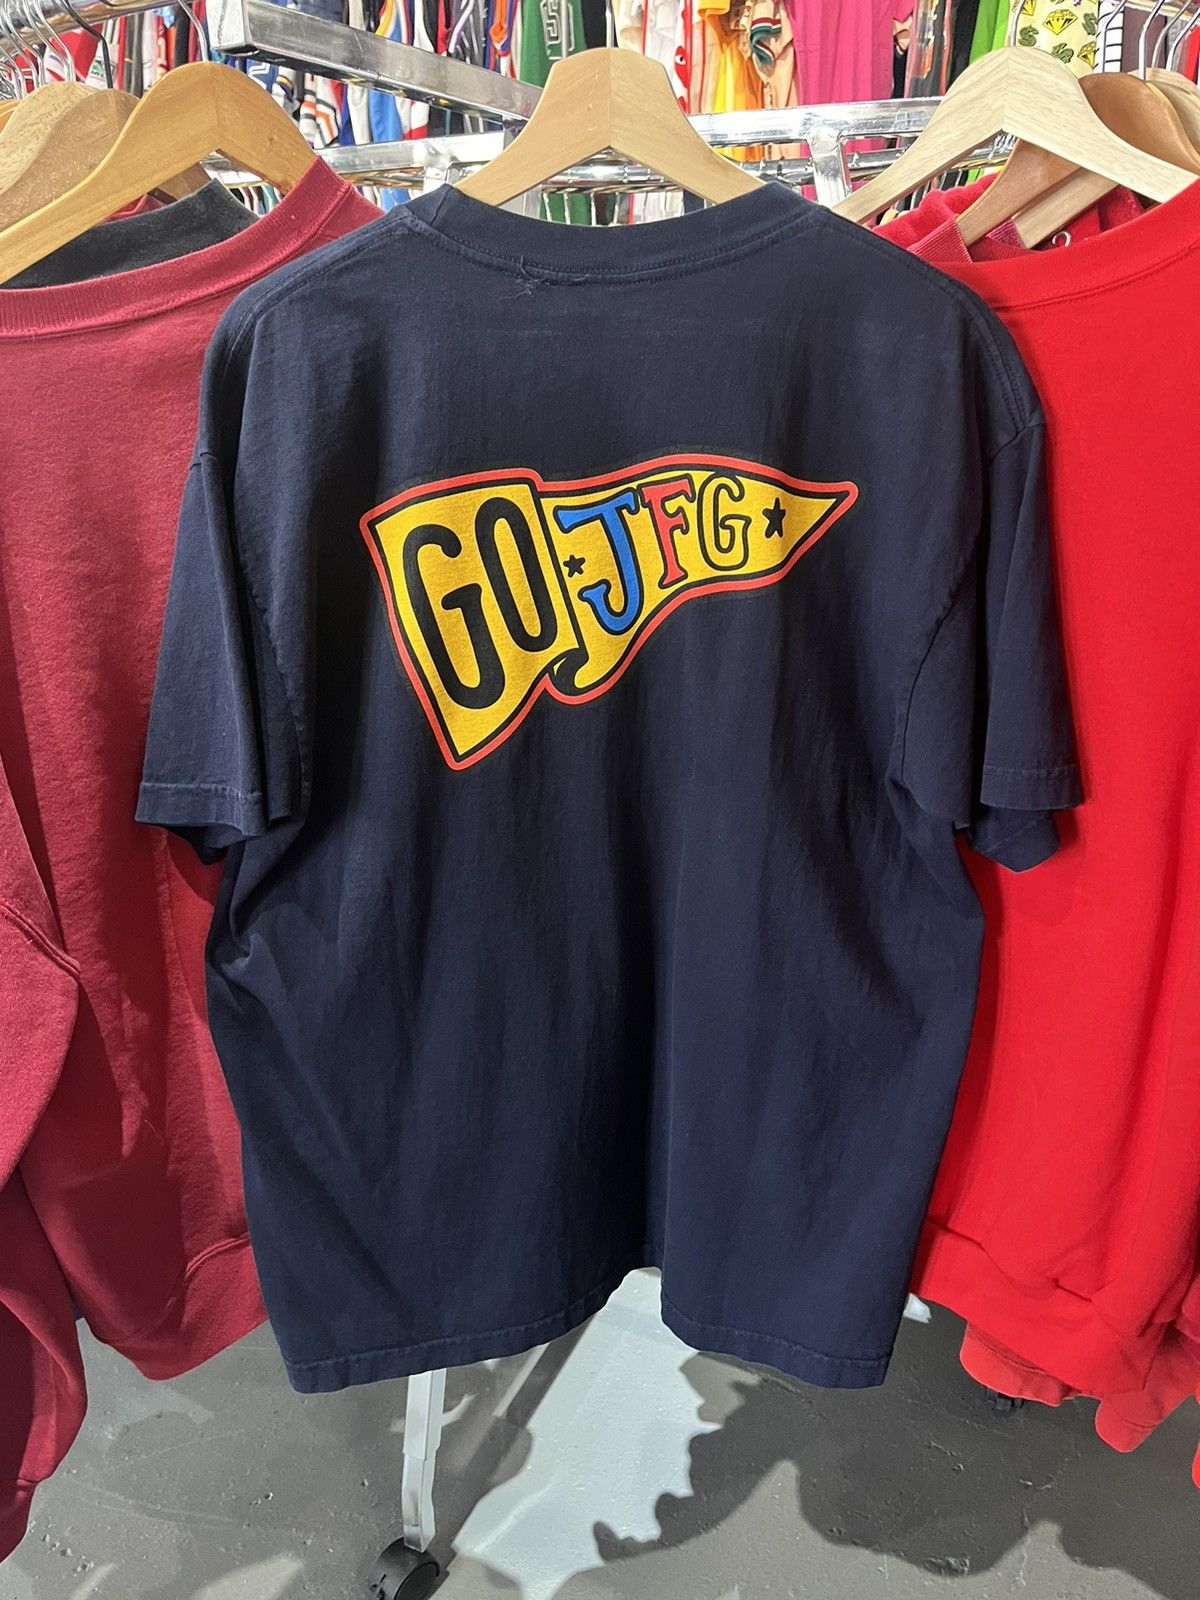 Joe Fresh Joe Fresh Goods Jover Street Market Double Sided T-Shirt L |  Grailed